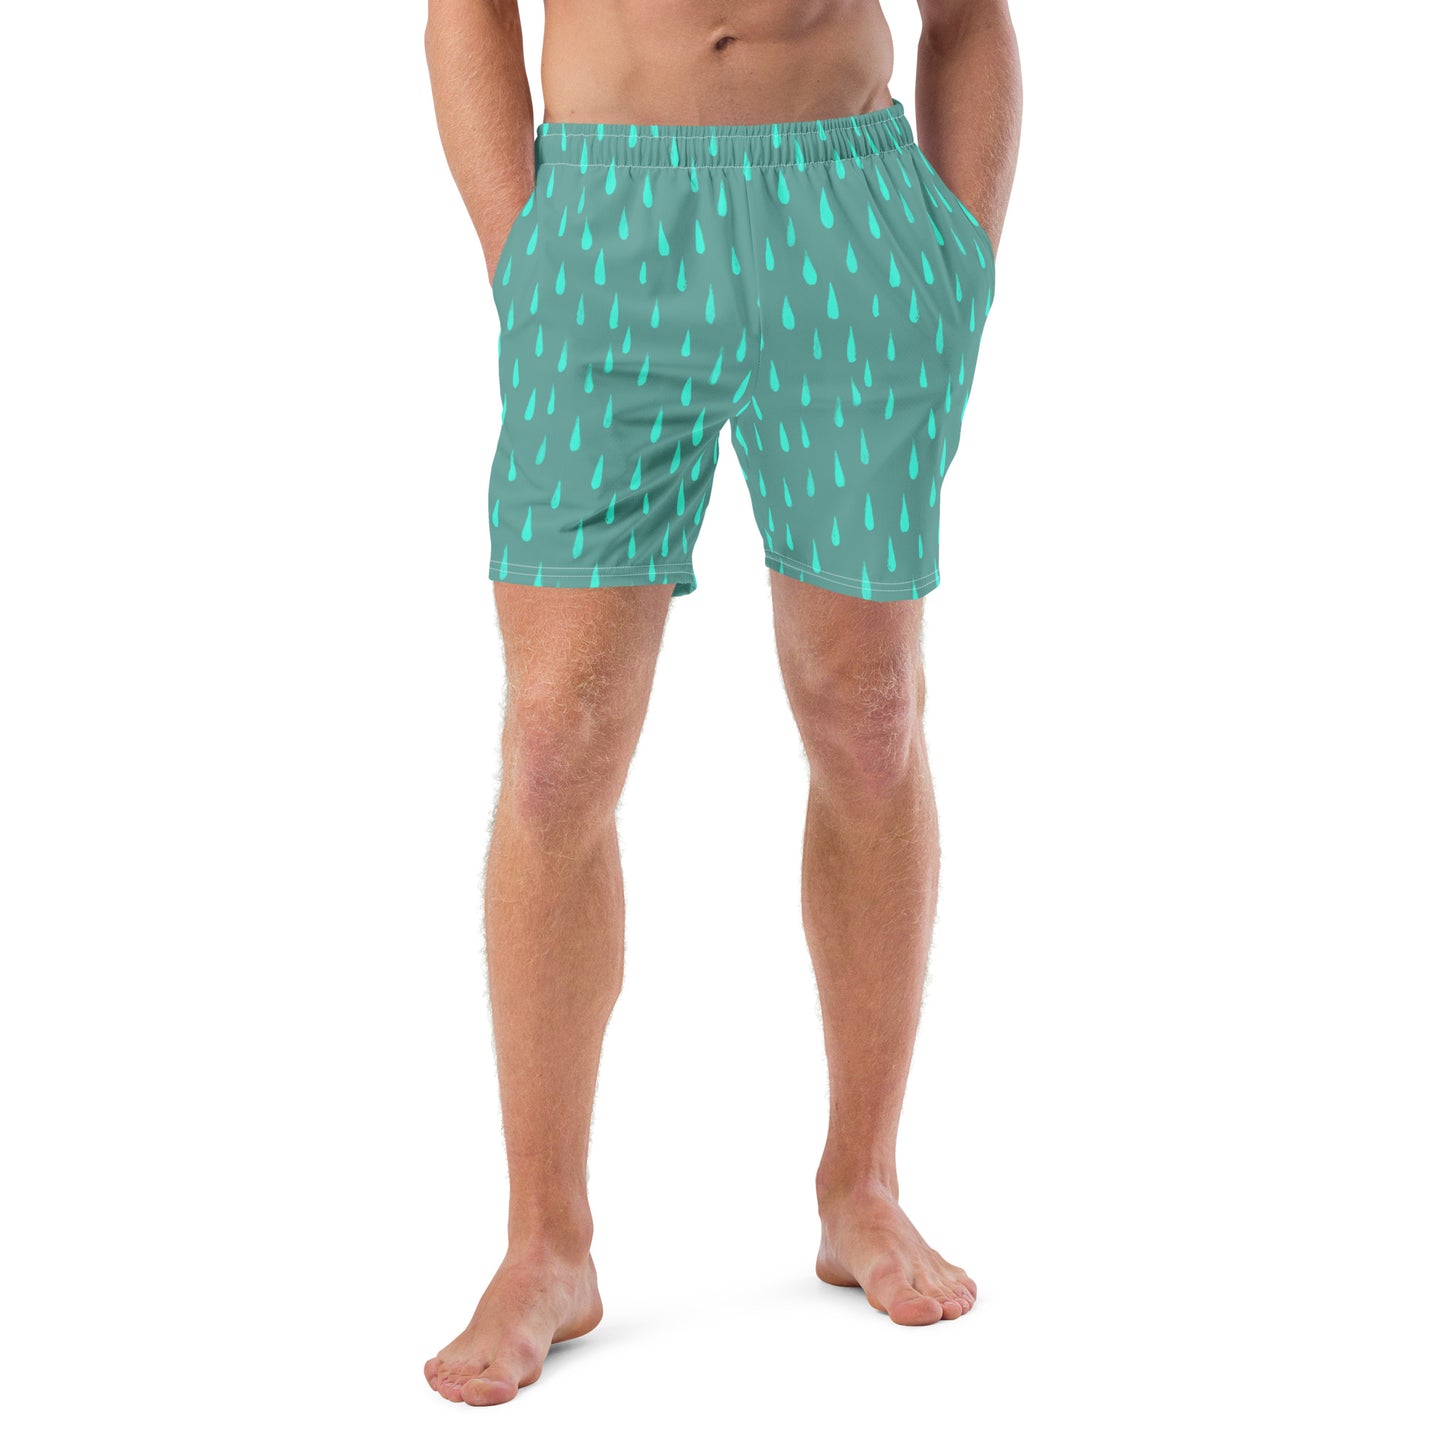 ♻️ Drops Recycled Men's swim trunks